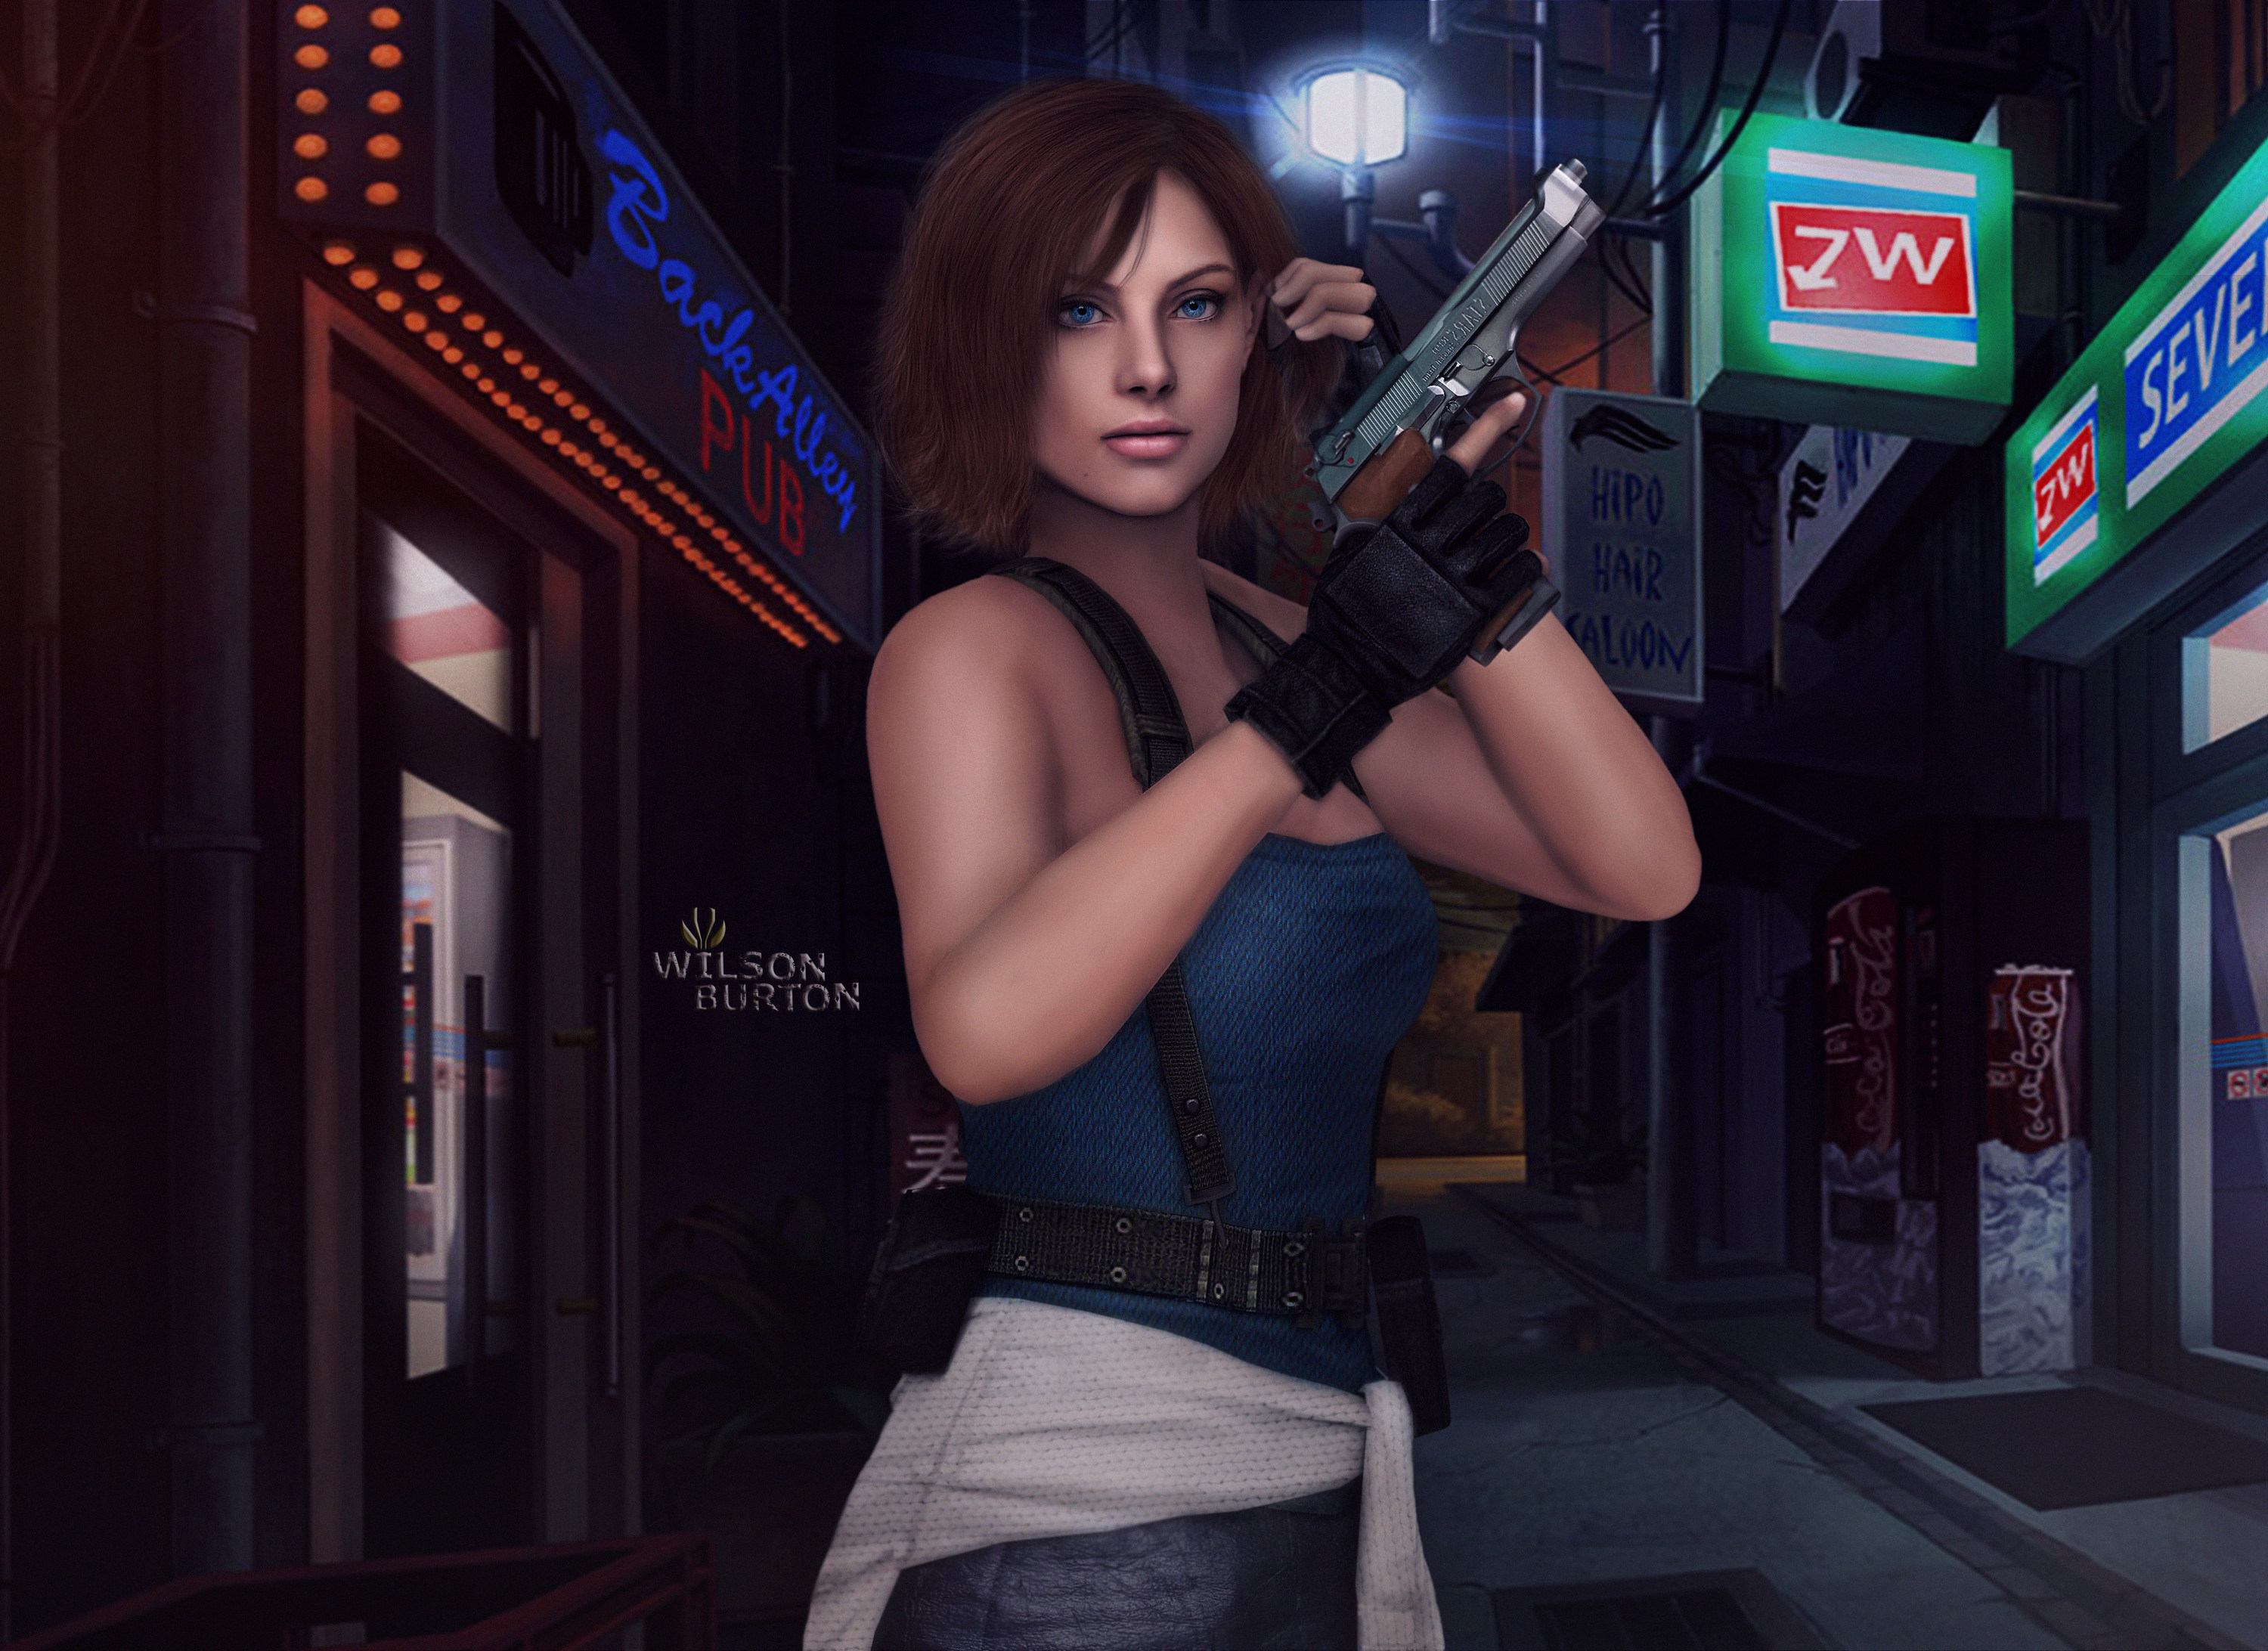 Jill Valentine Resident Evil Hd Fantasy Girls 4k Wallpapers Images 7462